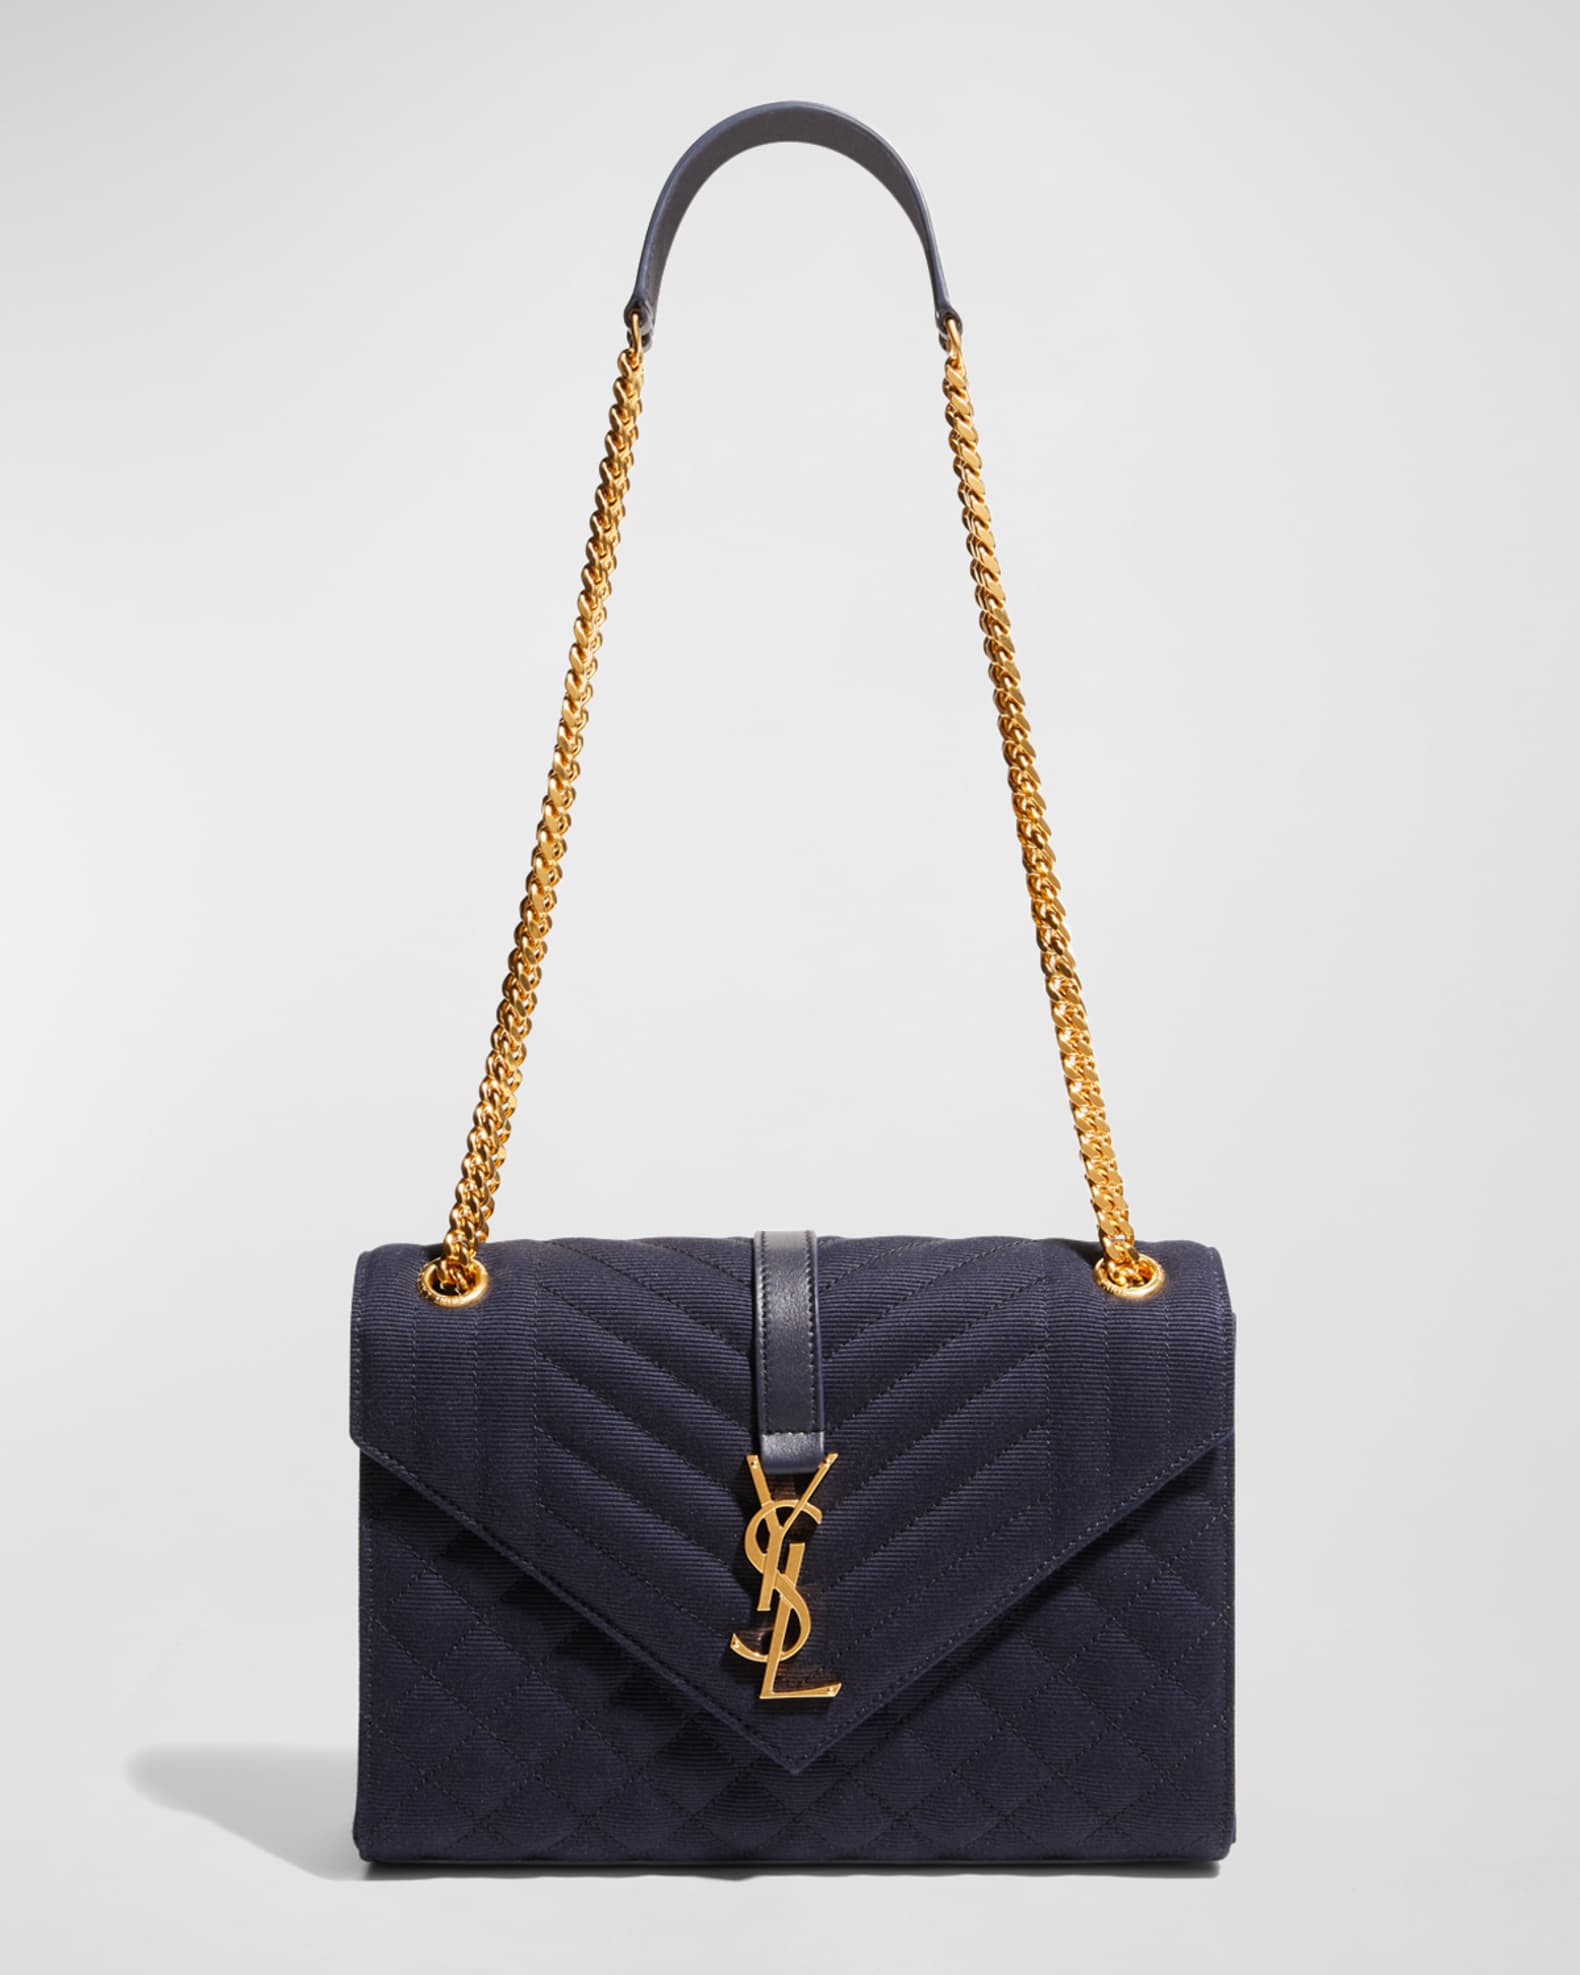 Ysl Bag - Yves Saint Laurent Suede Muse Two Larger Croc Satchel Bag